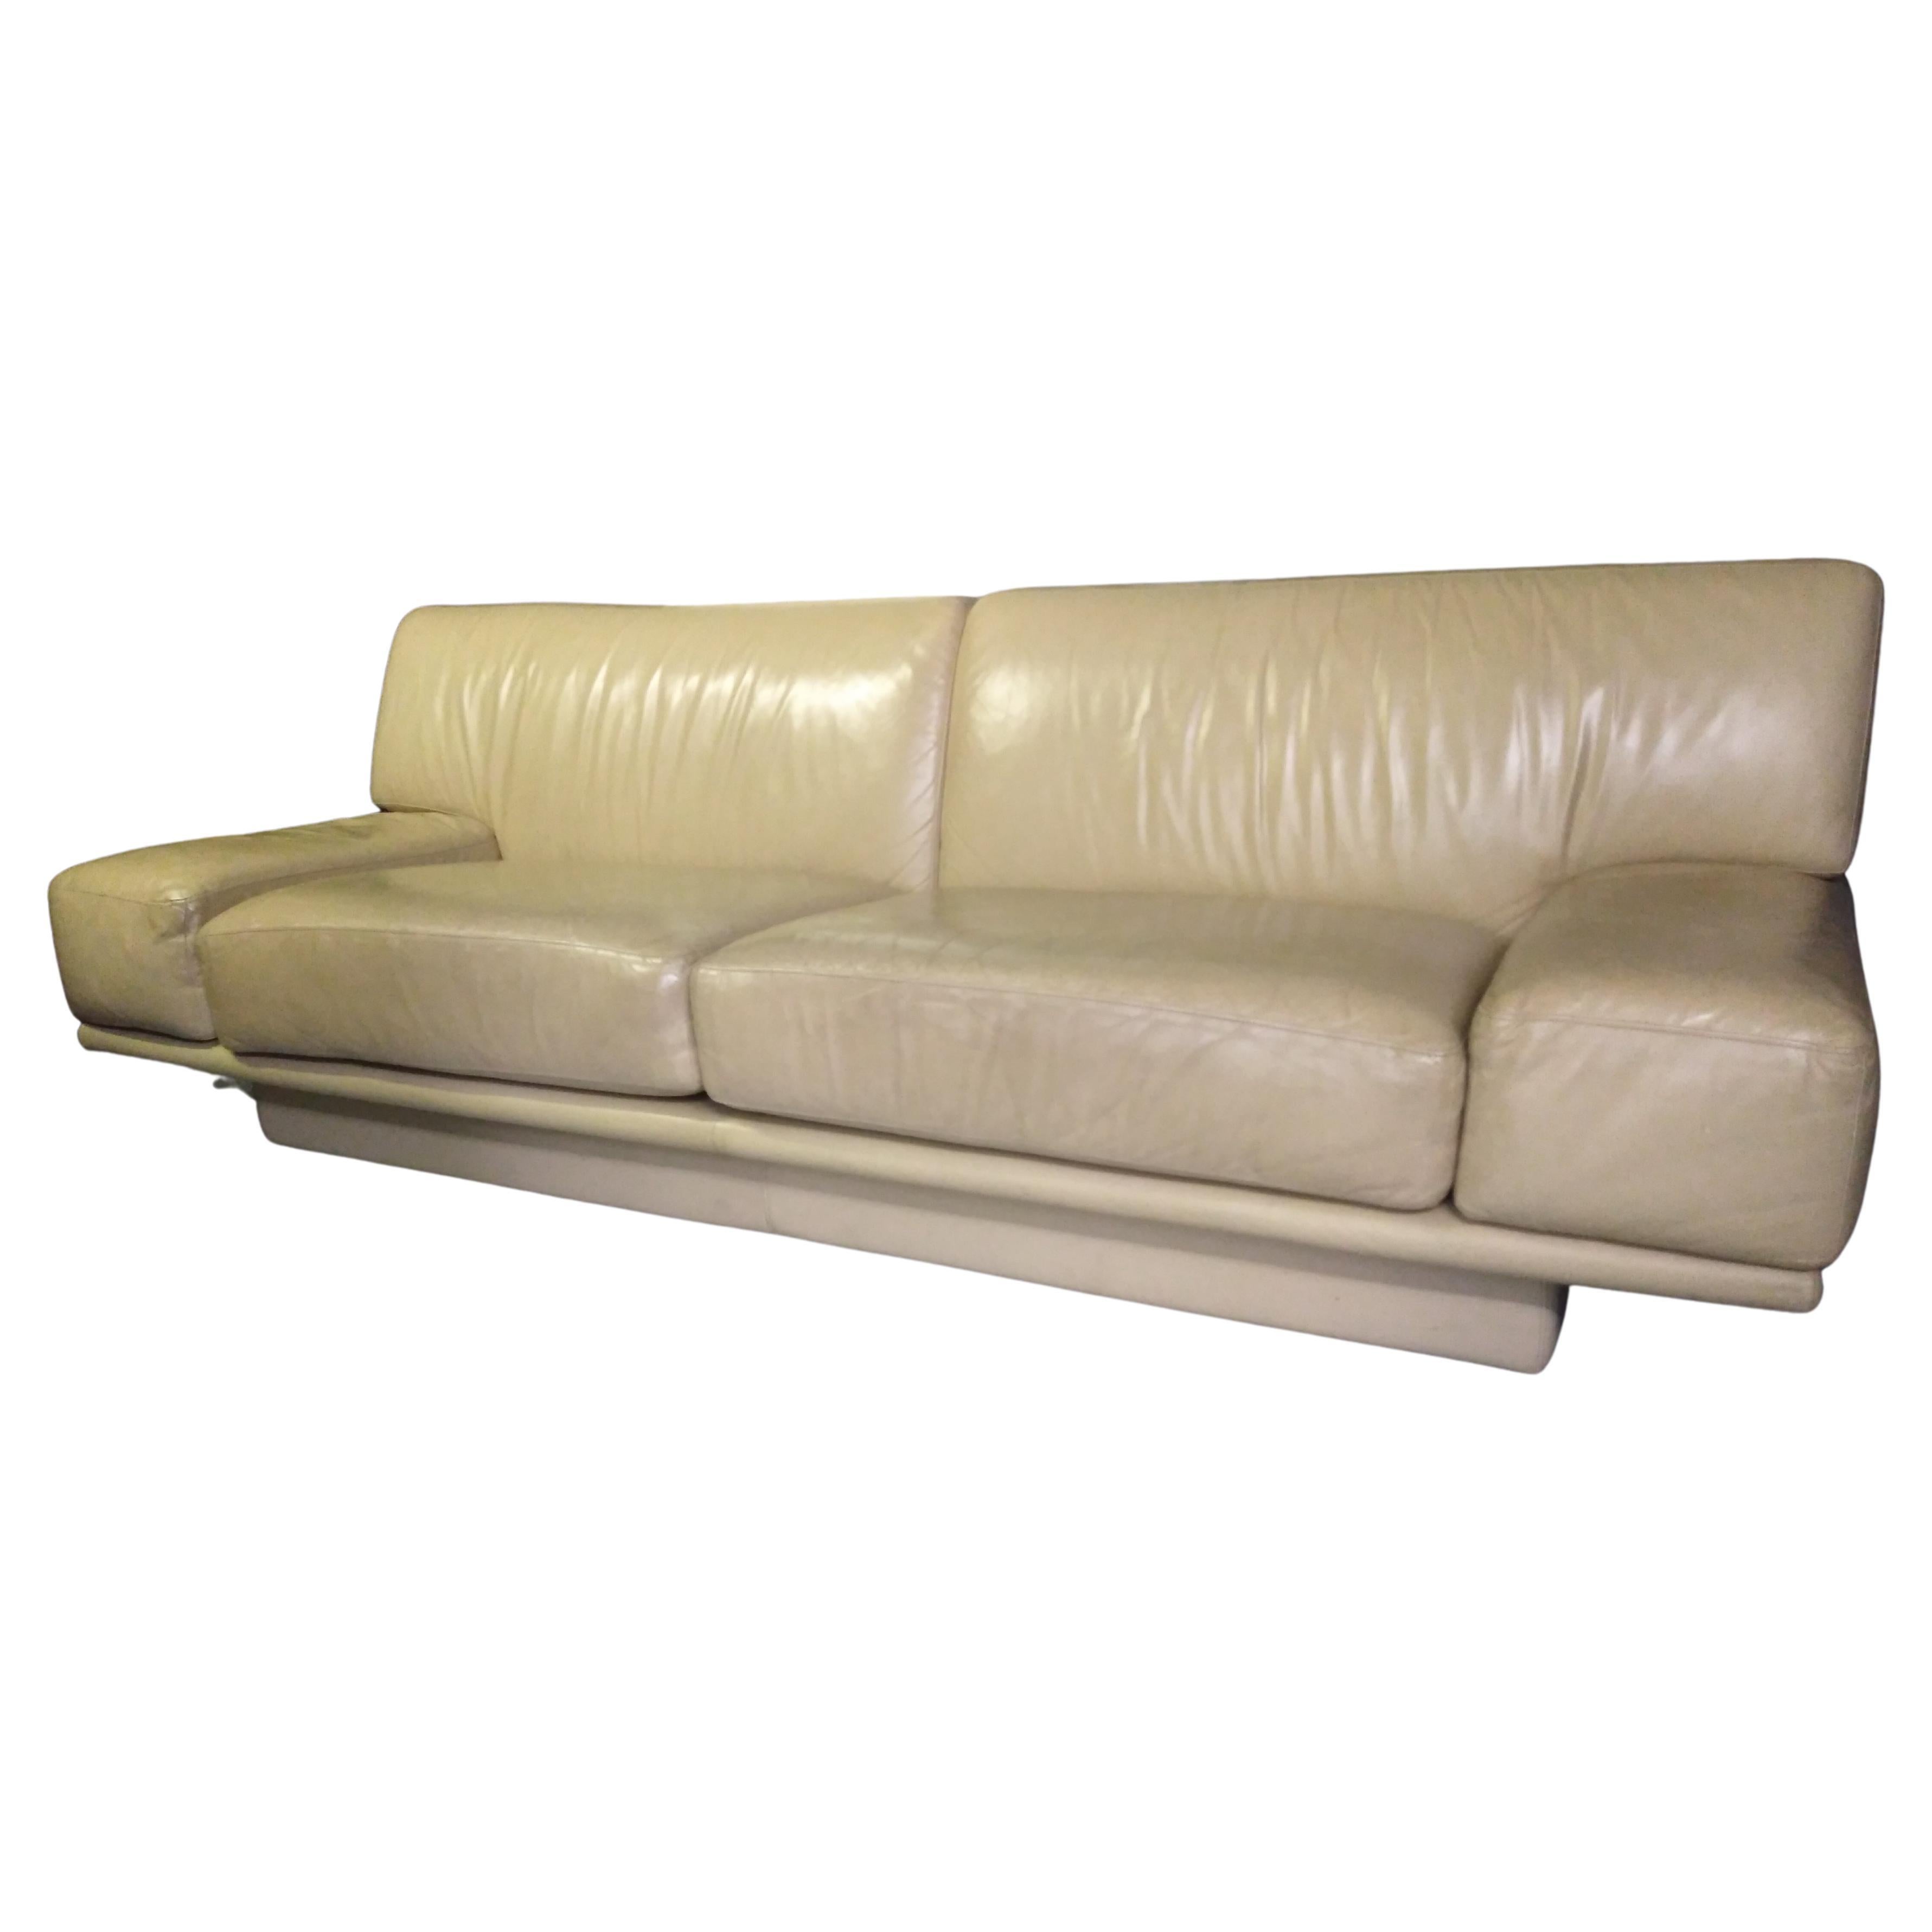 DS94 DeSede Leder-Sofa aus den 1980er Jahren